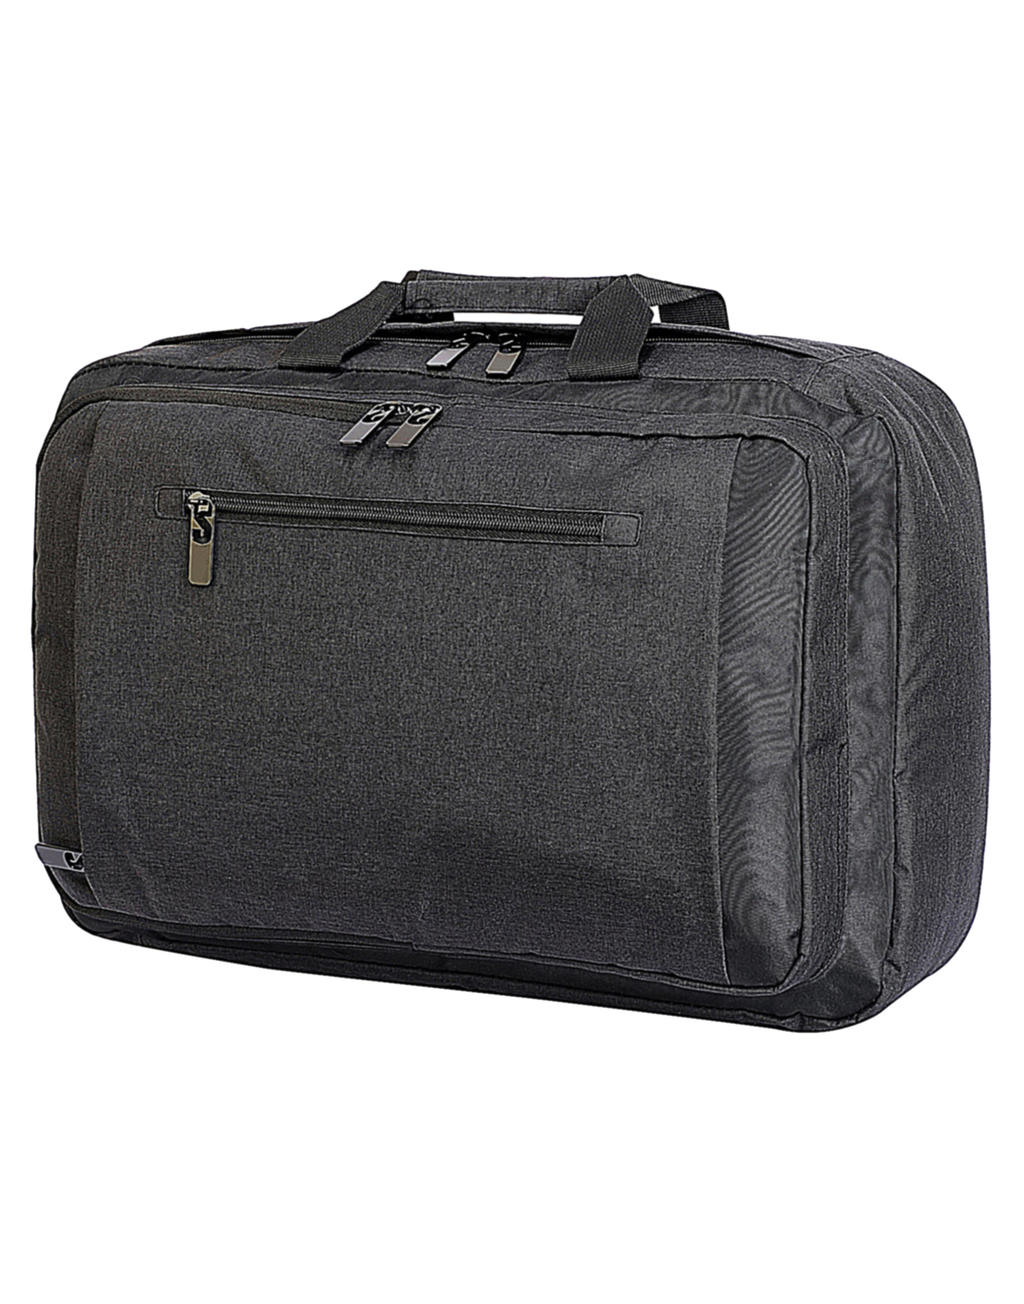  Bordeaux Hybrid Laptop Briefcase in Farbe Charcoal Melange/Black